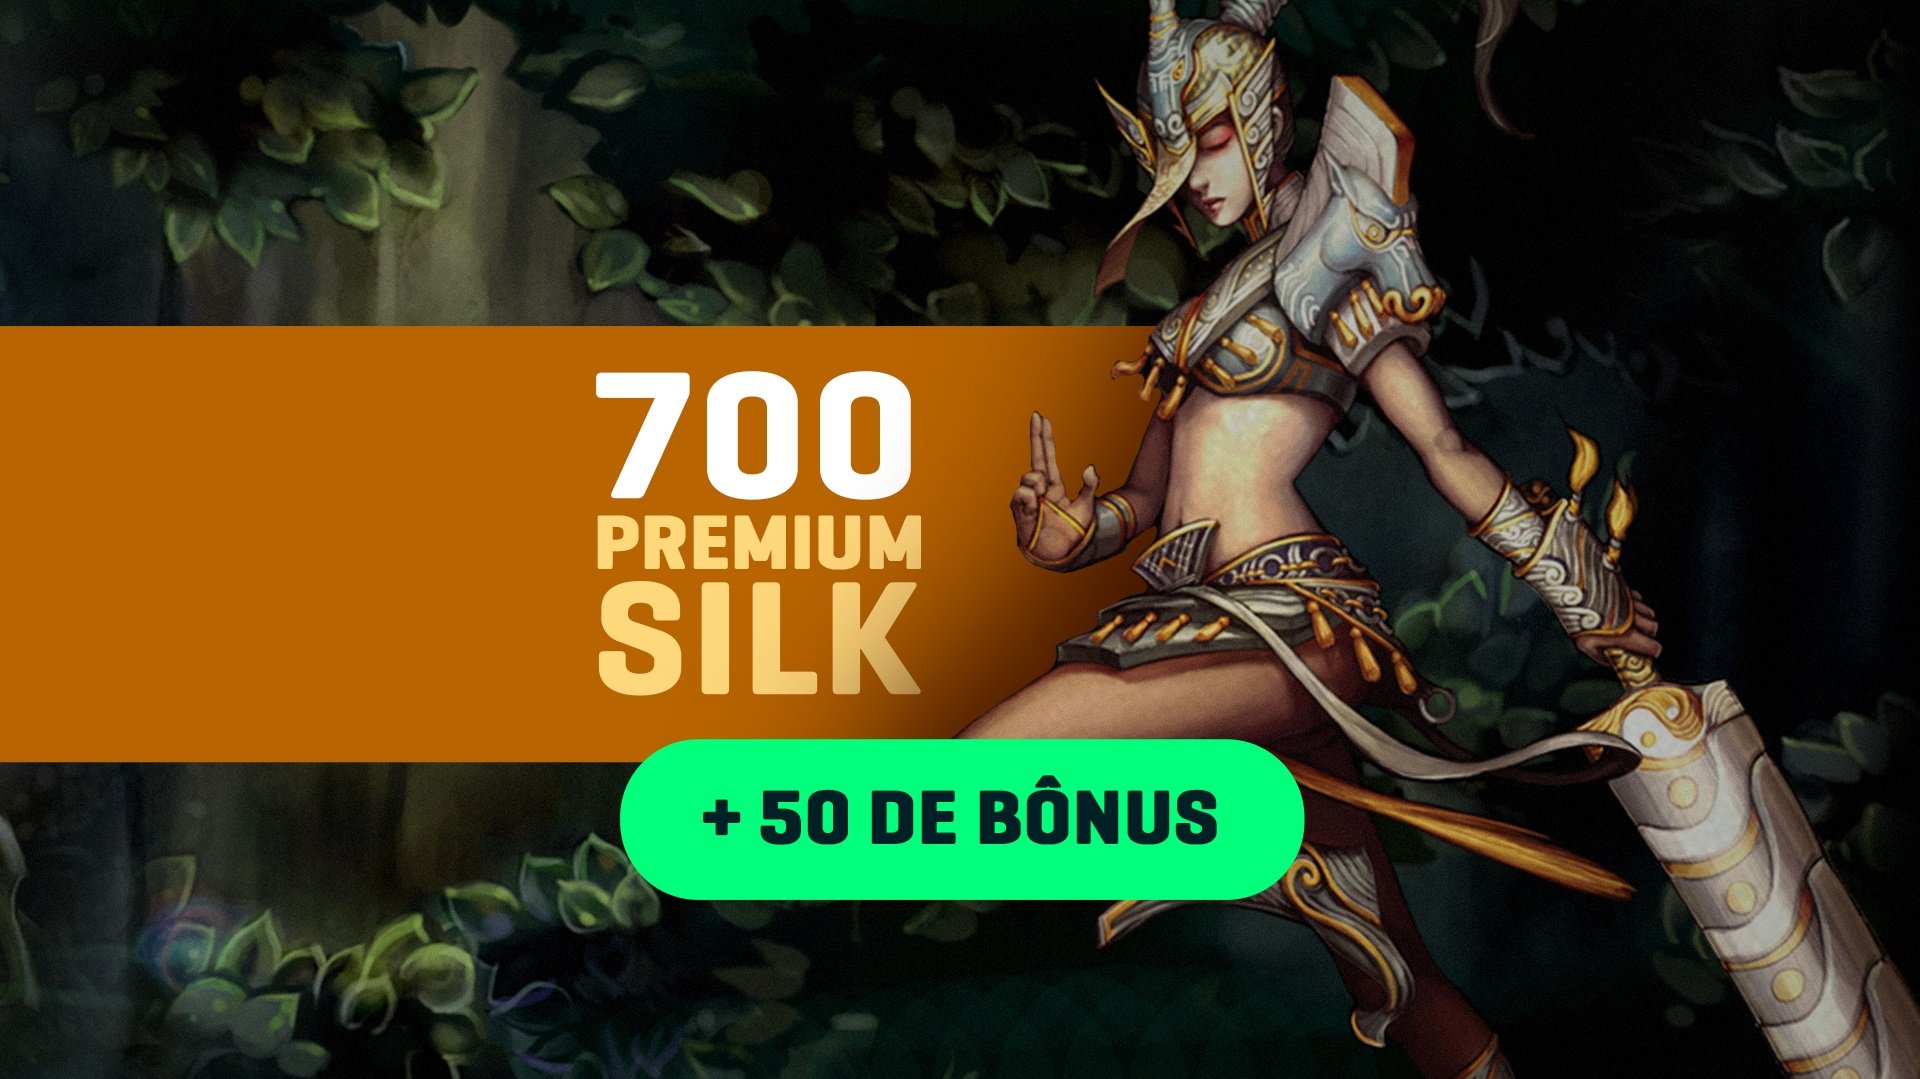 Silkroad – Pacote de 700 PREMIUM SILK + Bônus de 50 PREMIUM SILK